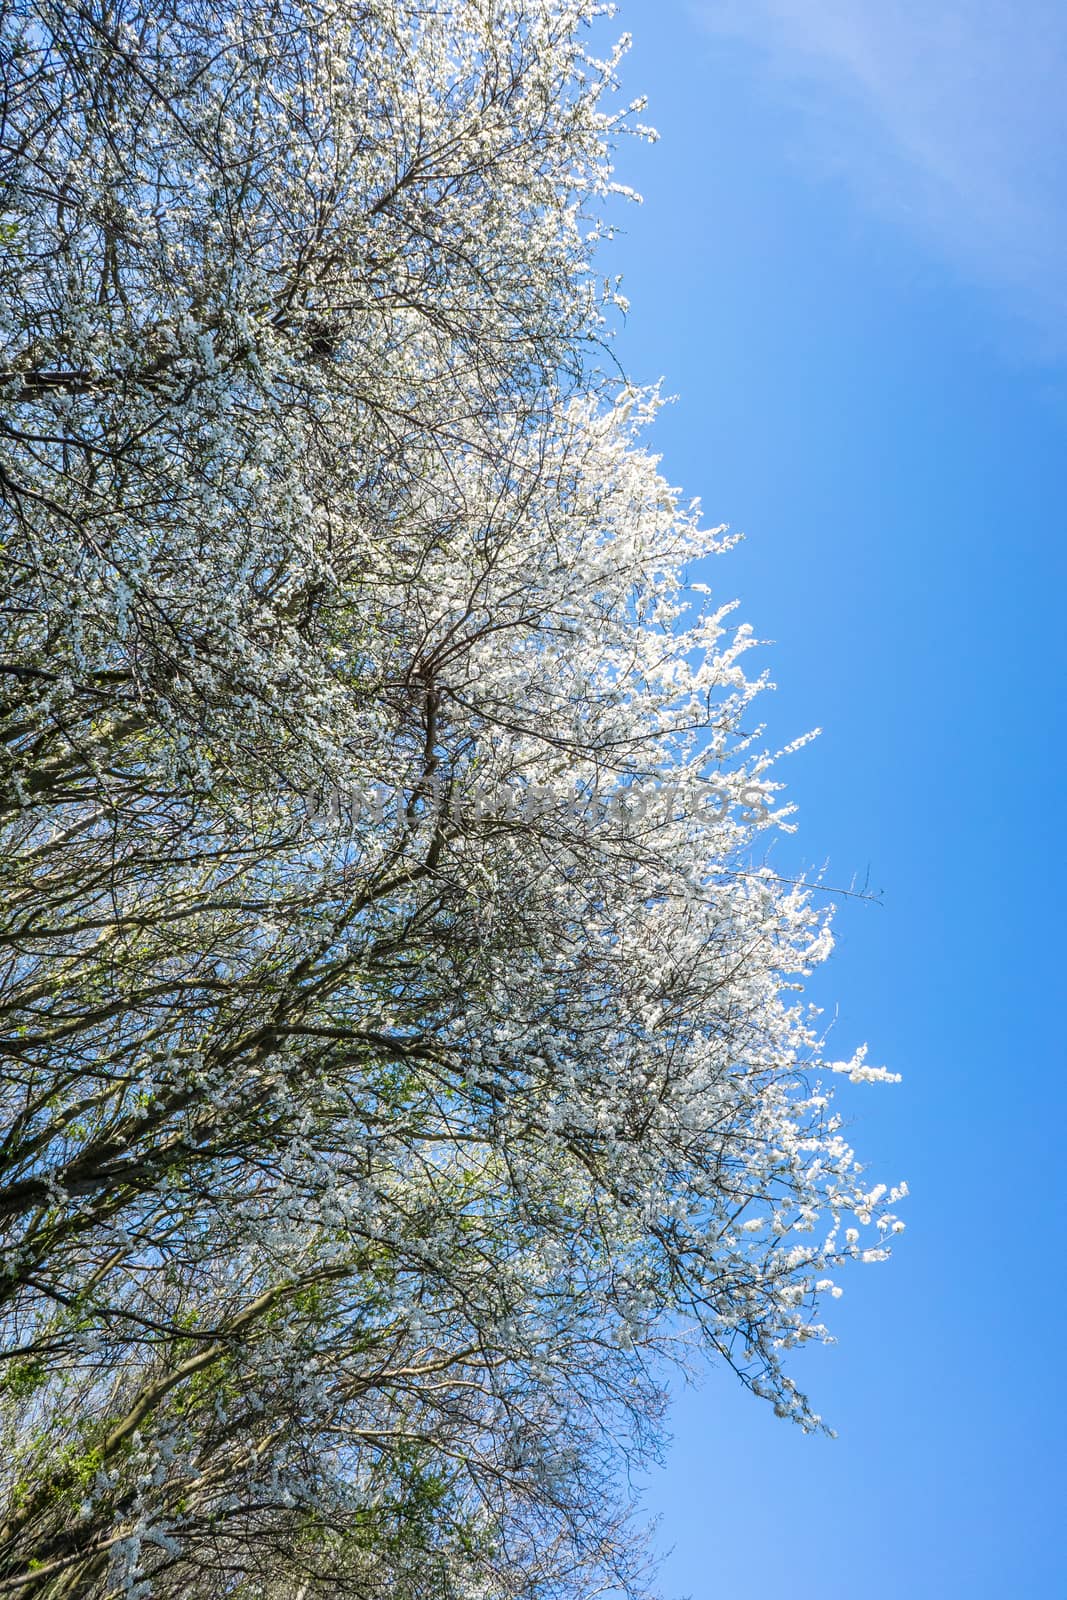 Prunus Cerasifera tree with white flowers in april